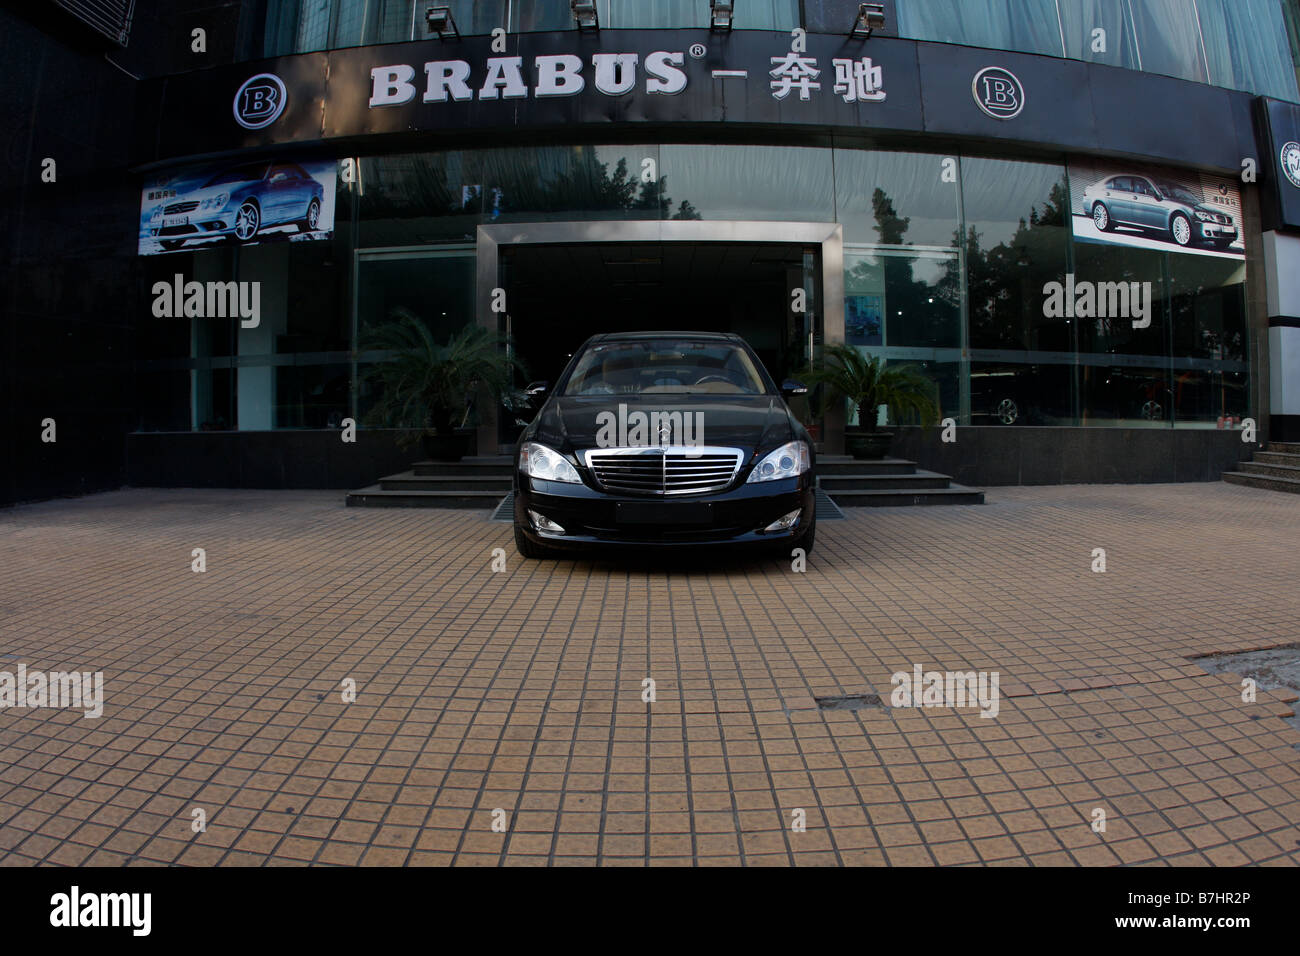 Chino Mercedes Brabus Concesionario Foto de stock